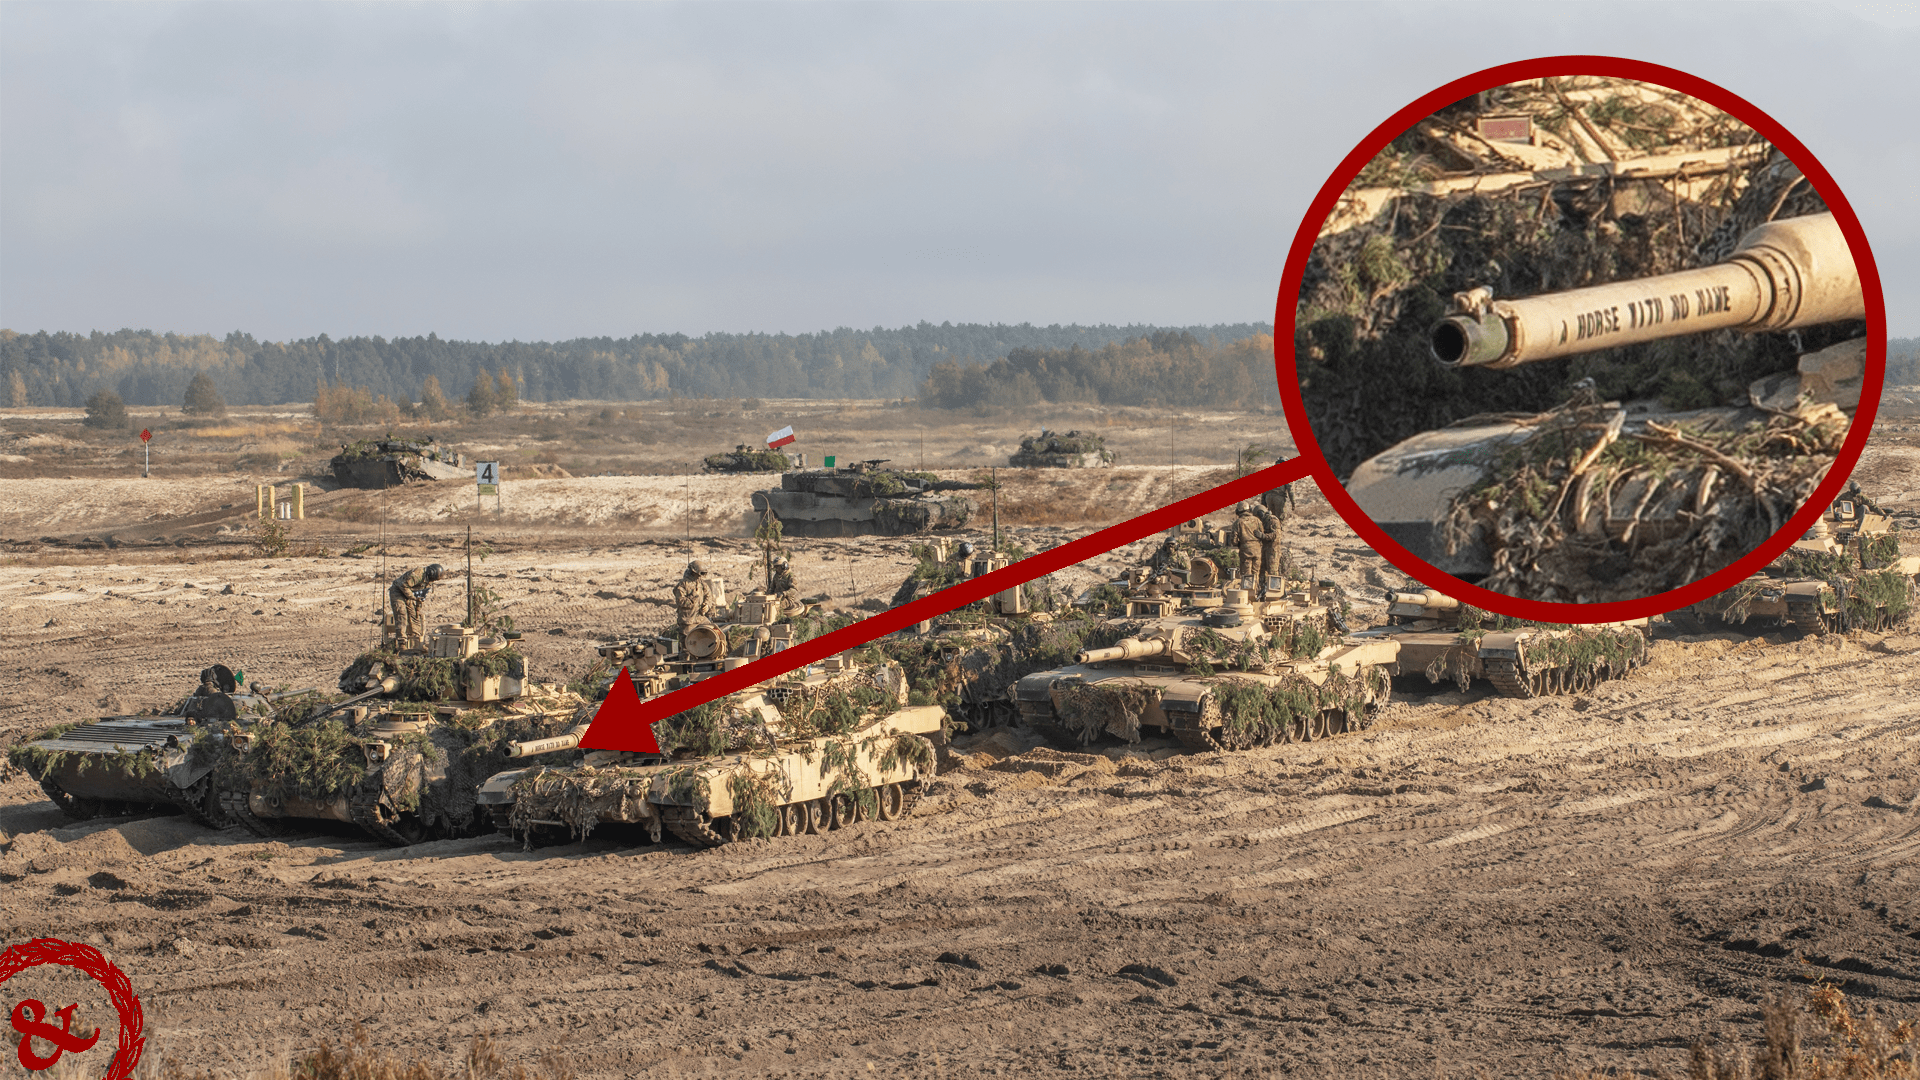 An Army M1 Abrams tank dubbed ‘A Horse With No Name’ is riding through Poland